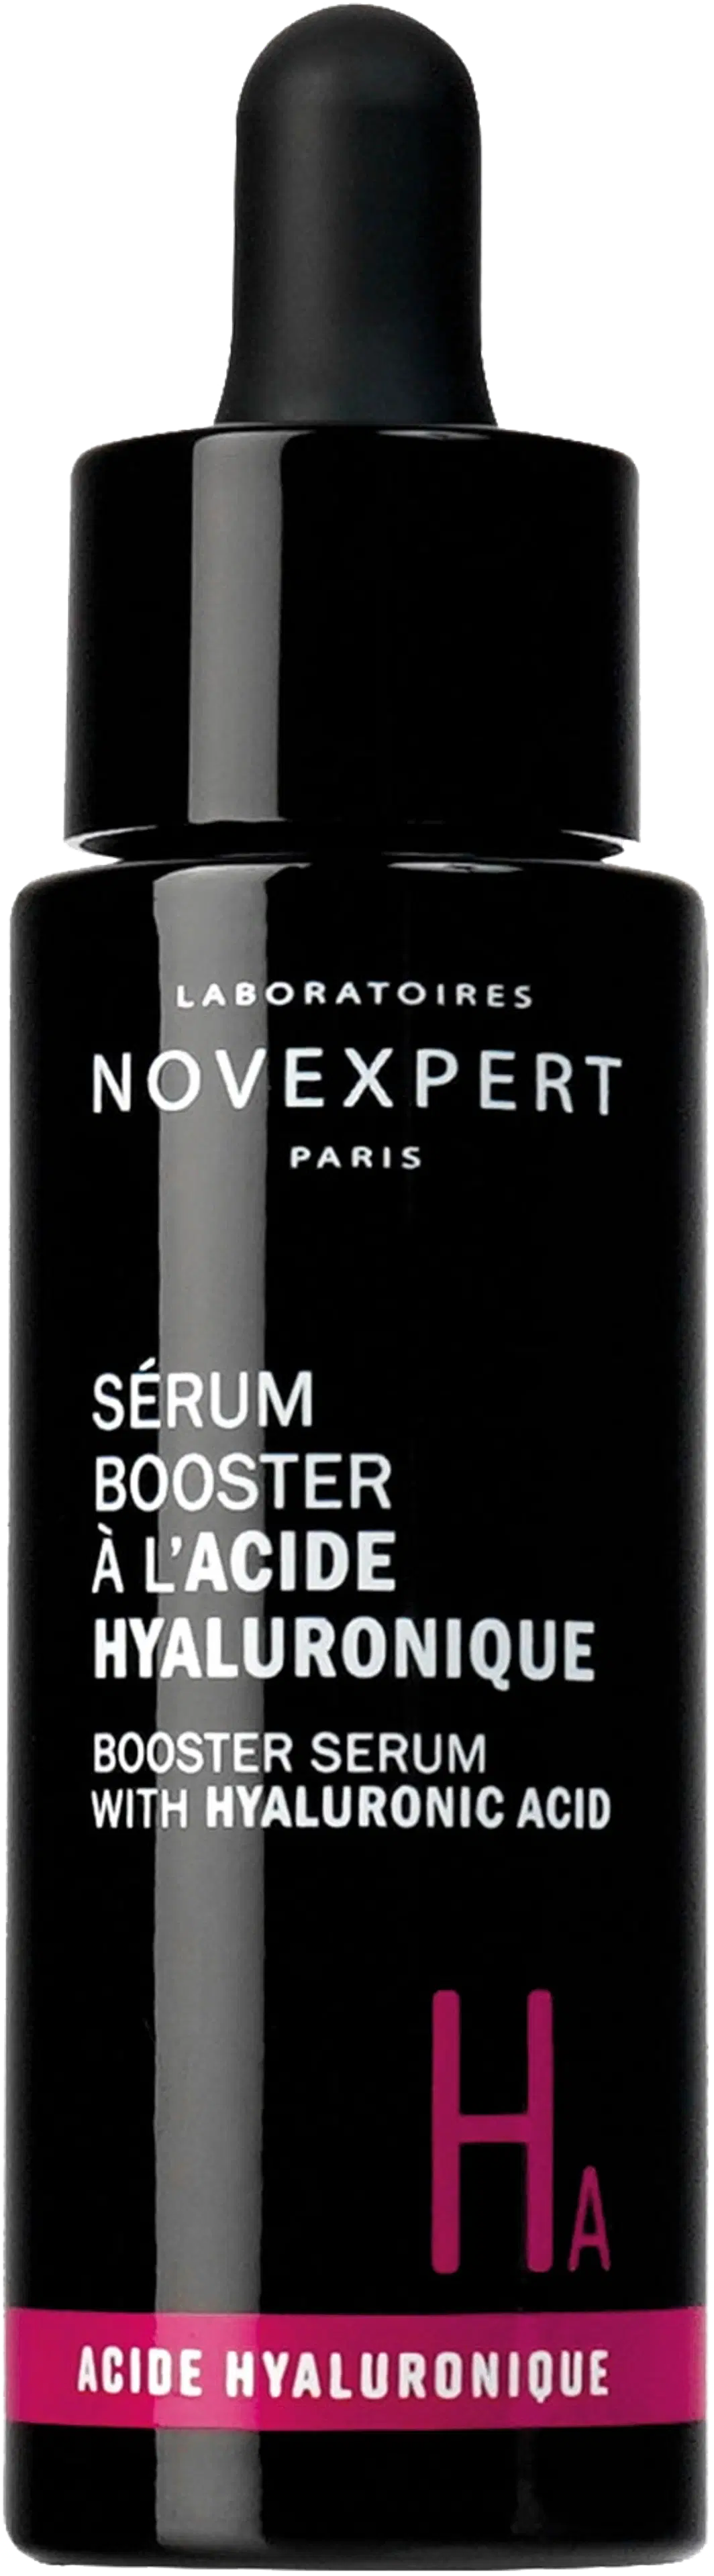 Novexpert Hyaluronic Acid Booster Serum 30ml